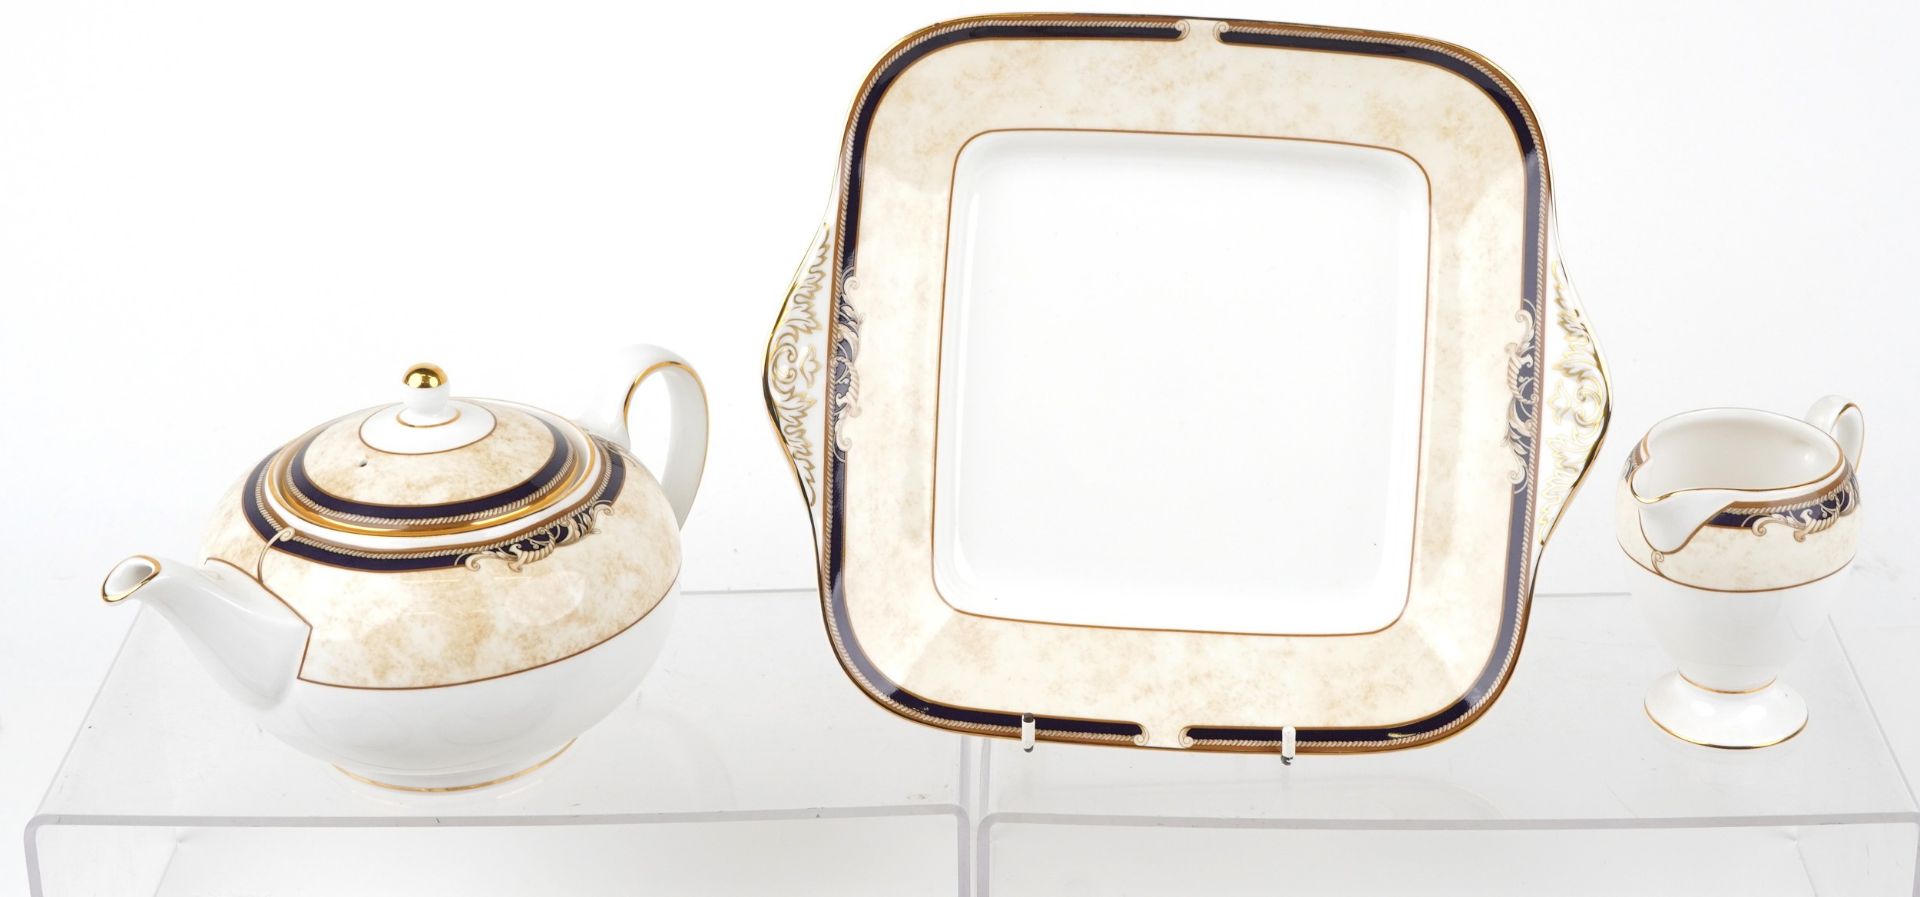 Wedgwood Cornucopia dinner and teaware, predominantly as new, comprising teapot, milk jug, sugar - Image 2 of 4